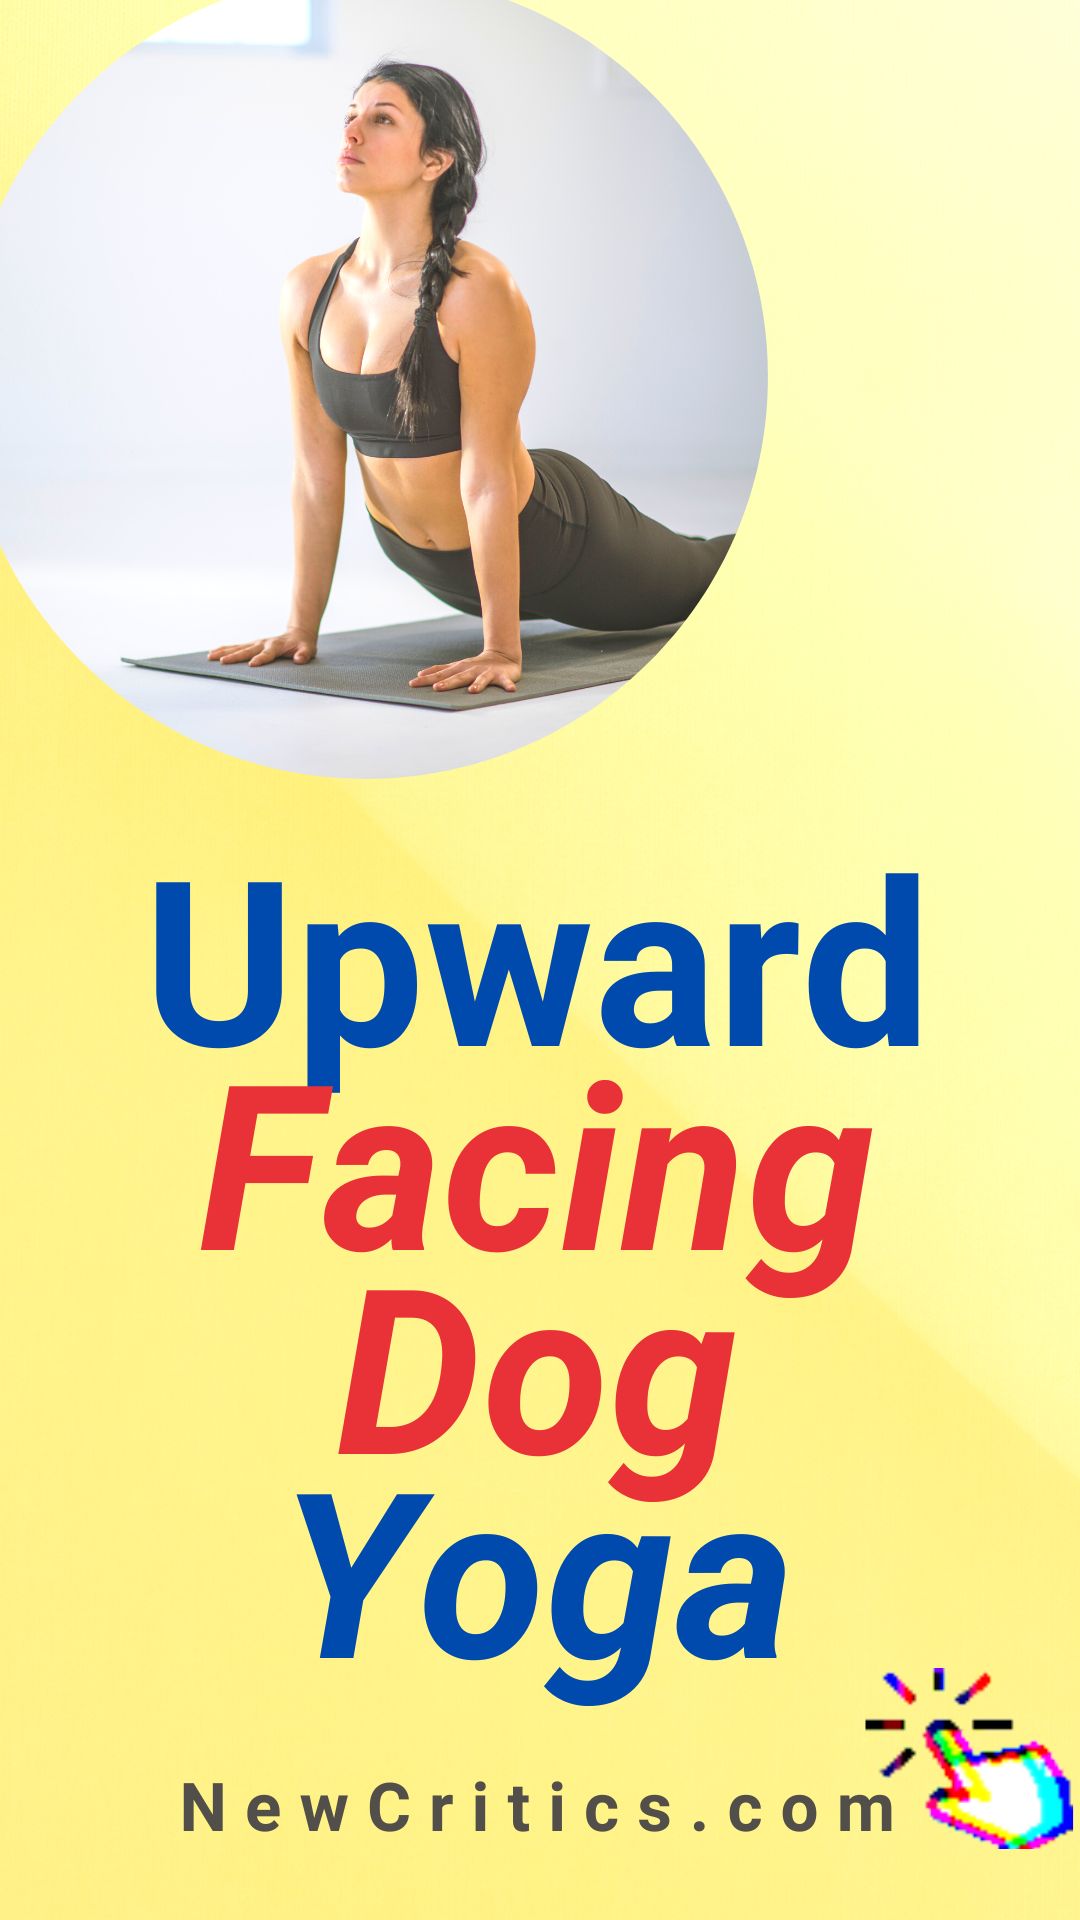 Yoga Upward Facing Dog / Canva